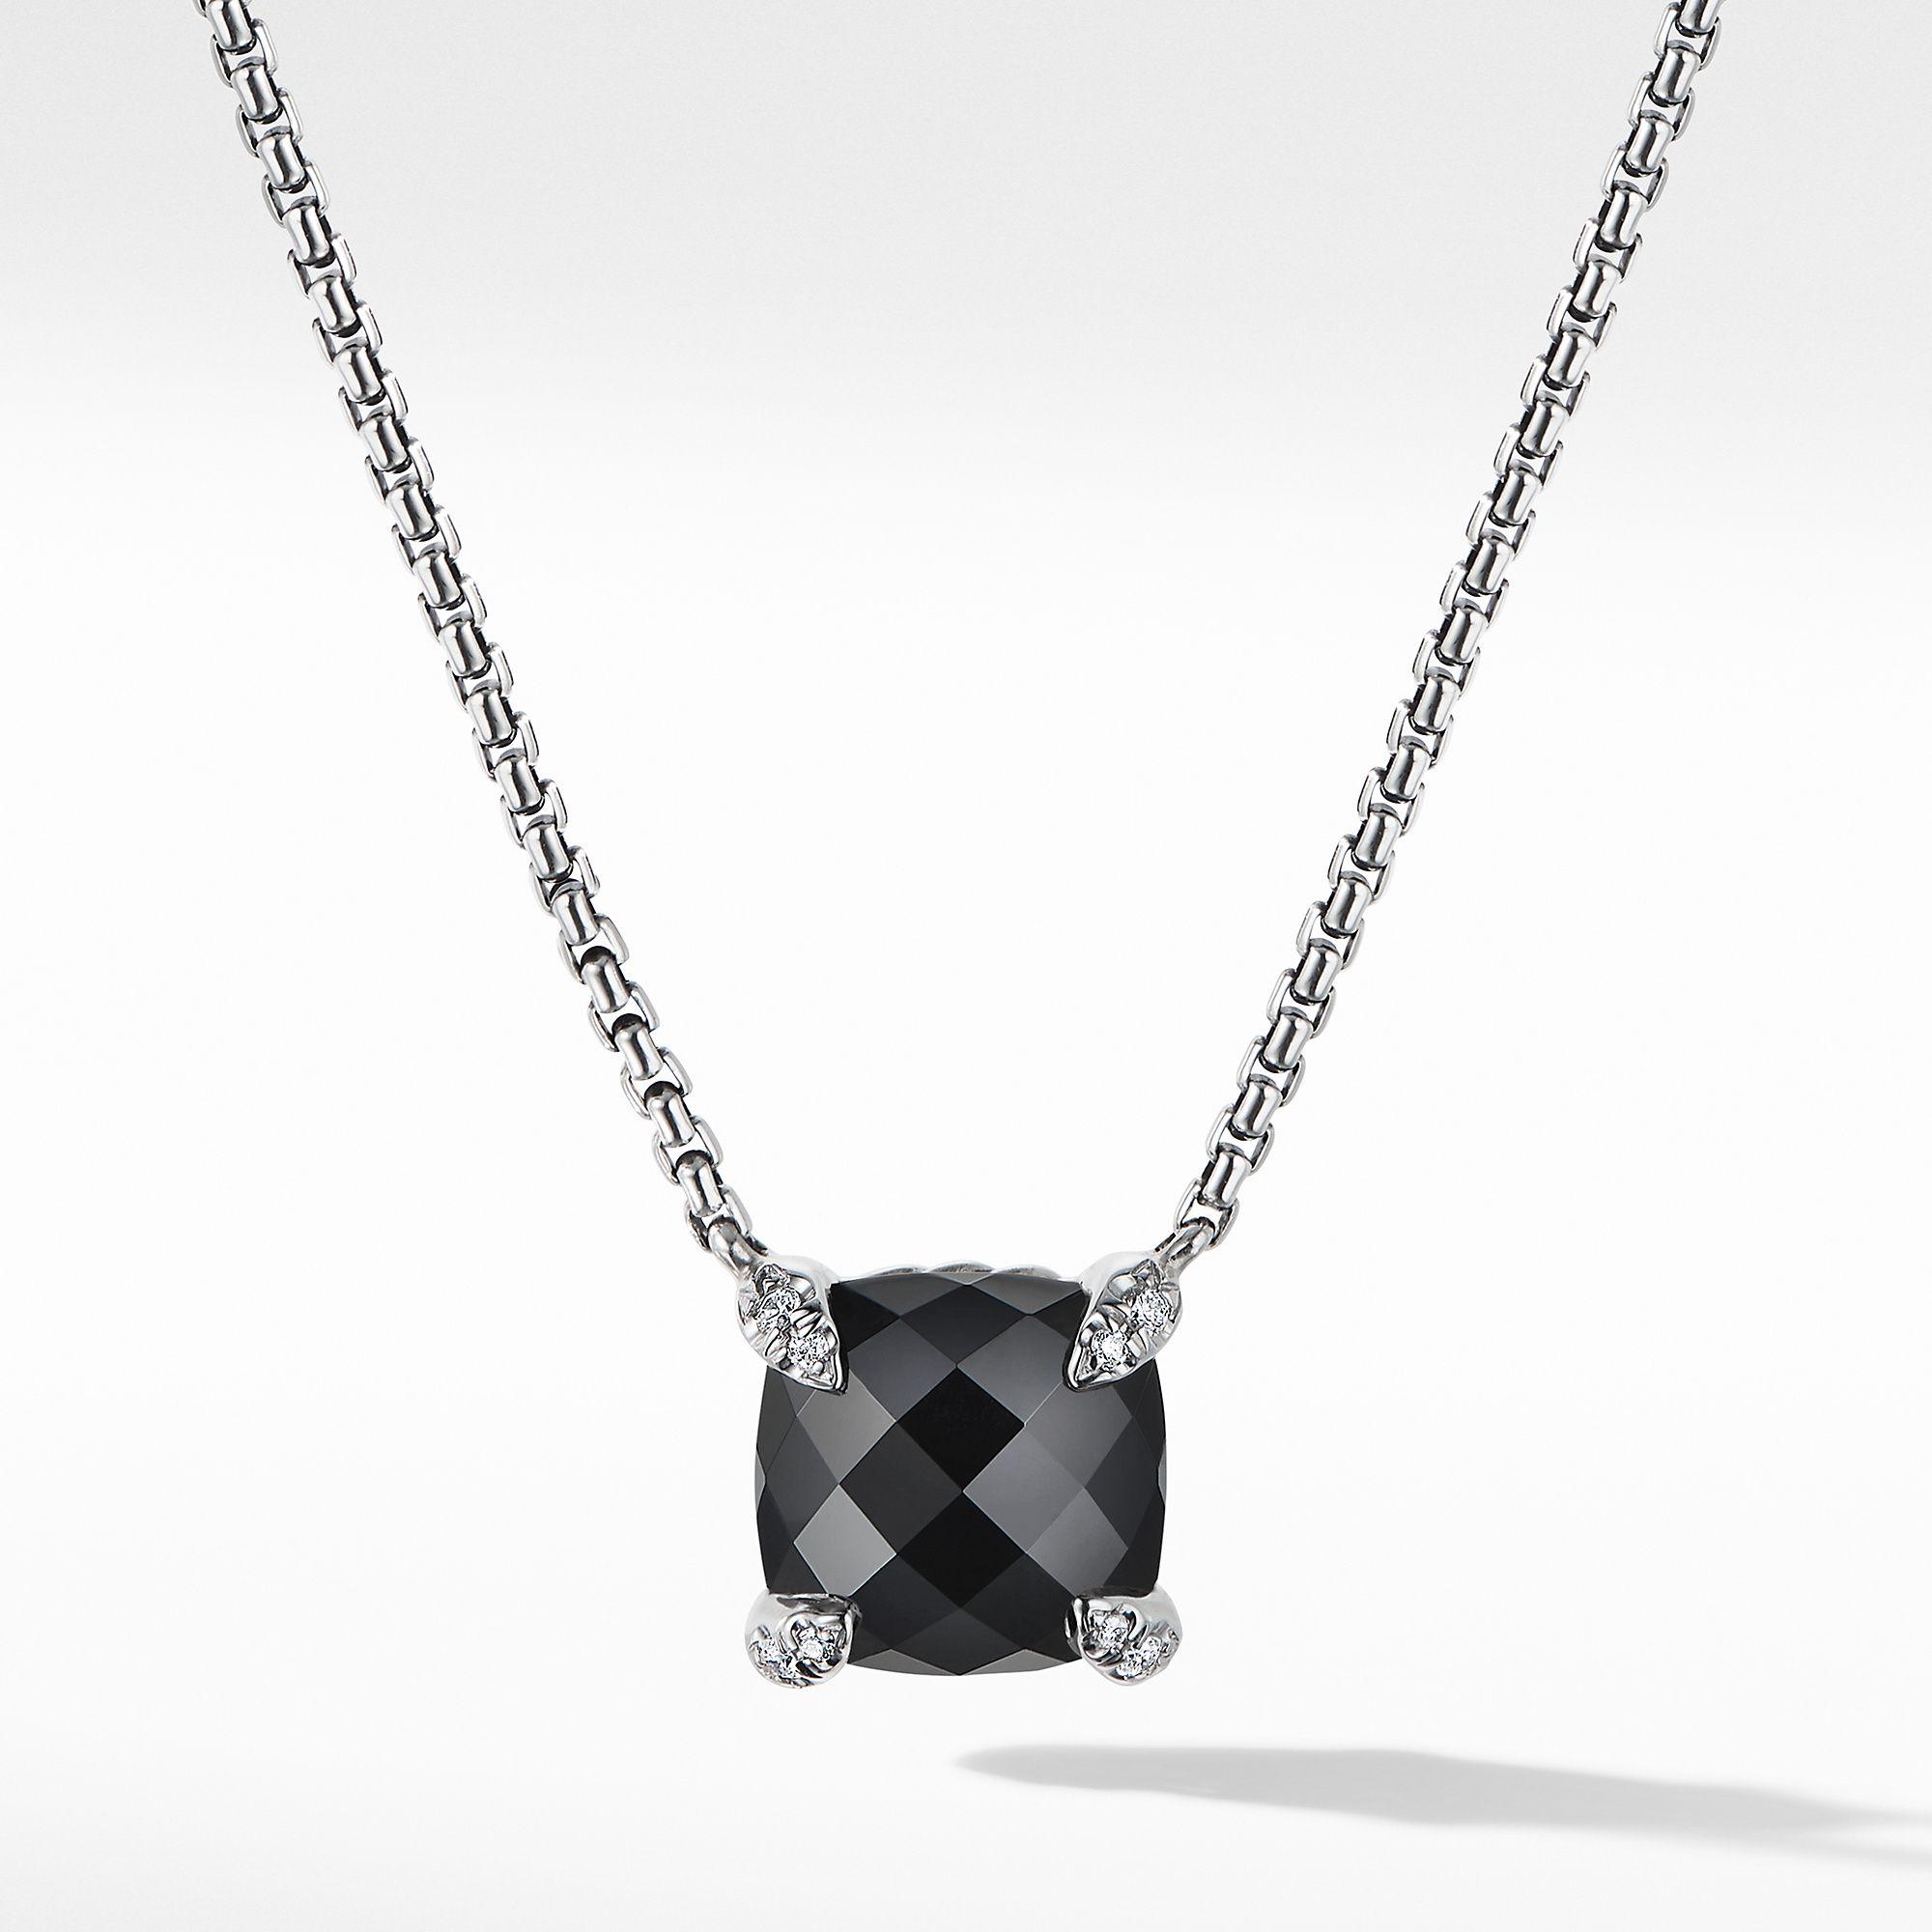 David Yurman Chatelaine Pendant Necklace with Black Onyx and Diamonds